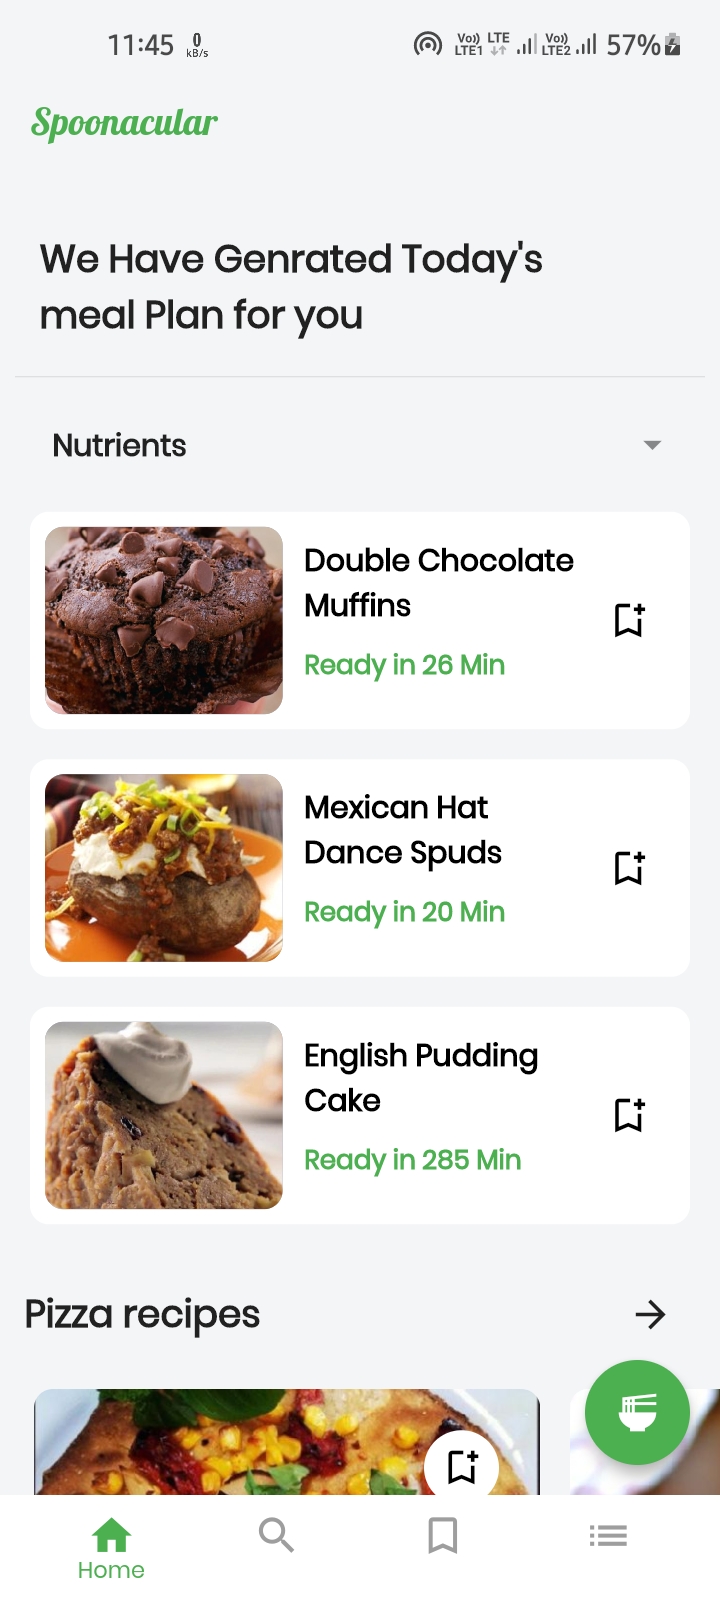 A Flutter Recipe app with spoonacular API